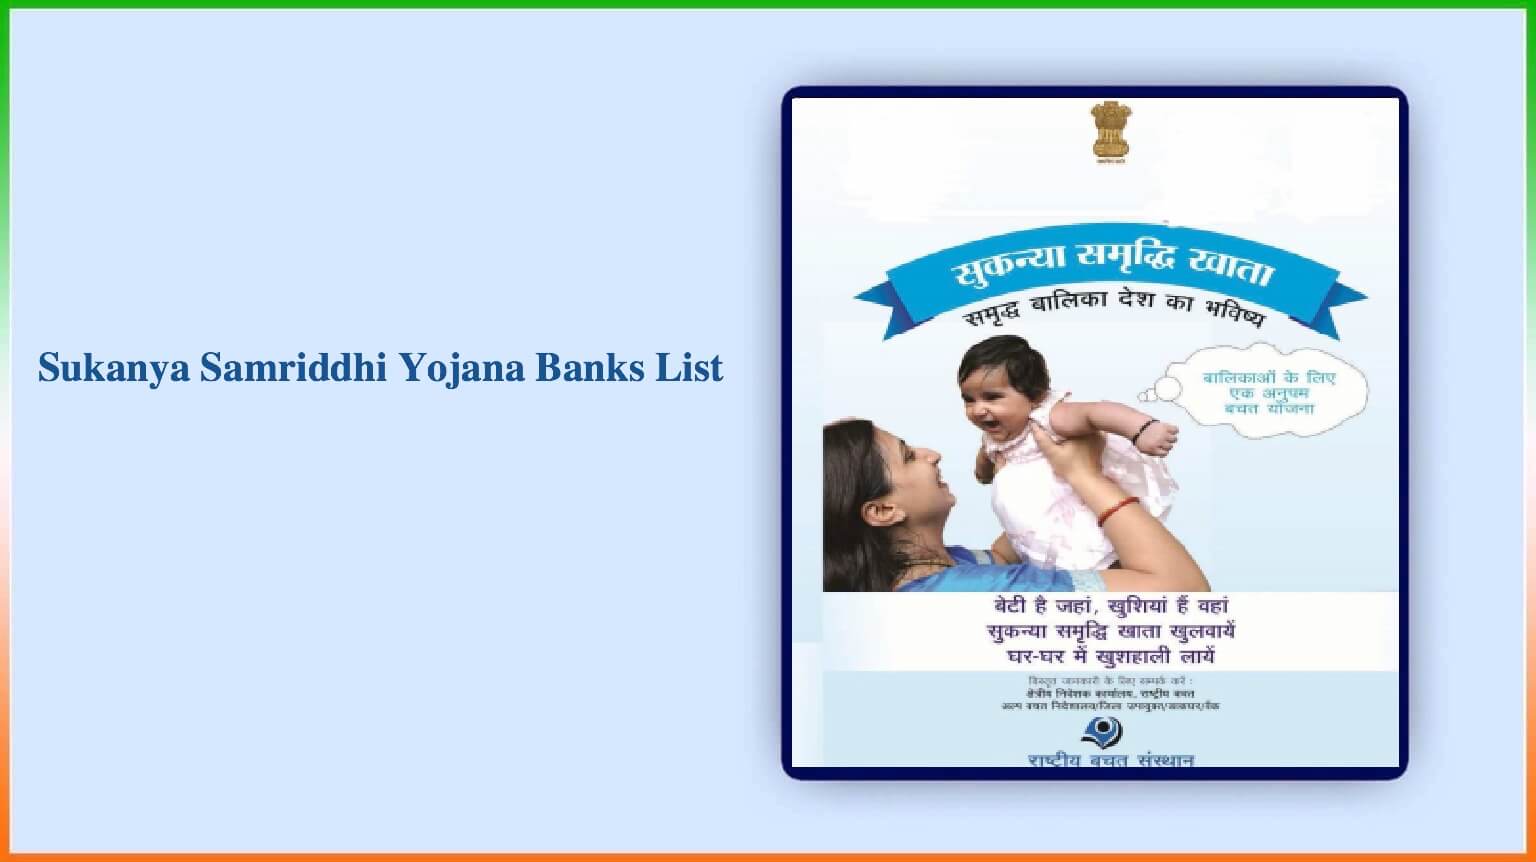 Sukanya Samriddhi Yojana Banks List